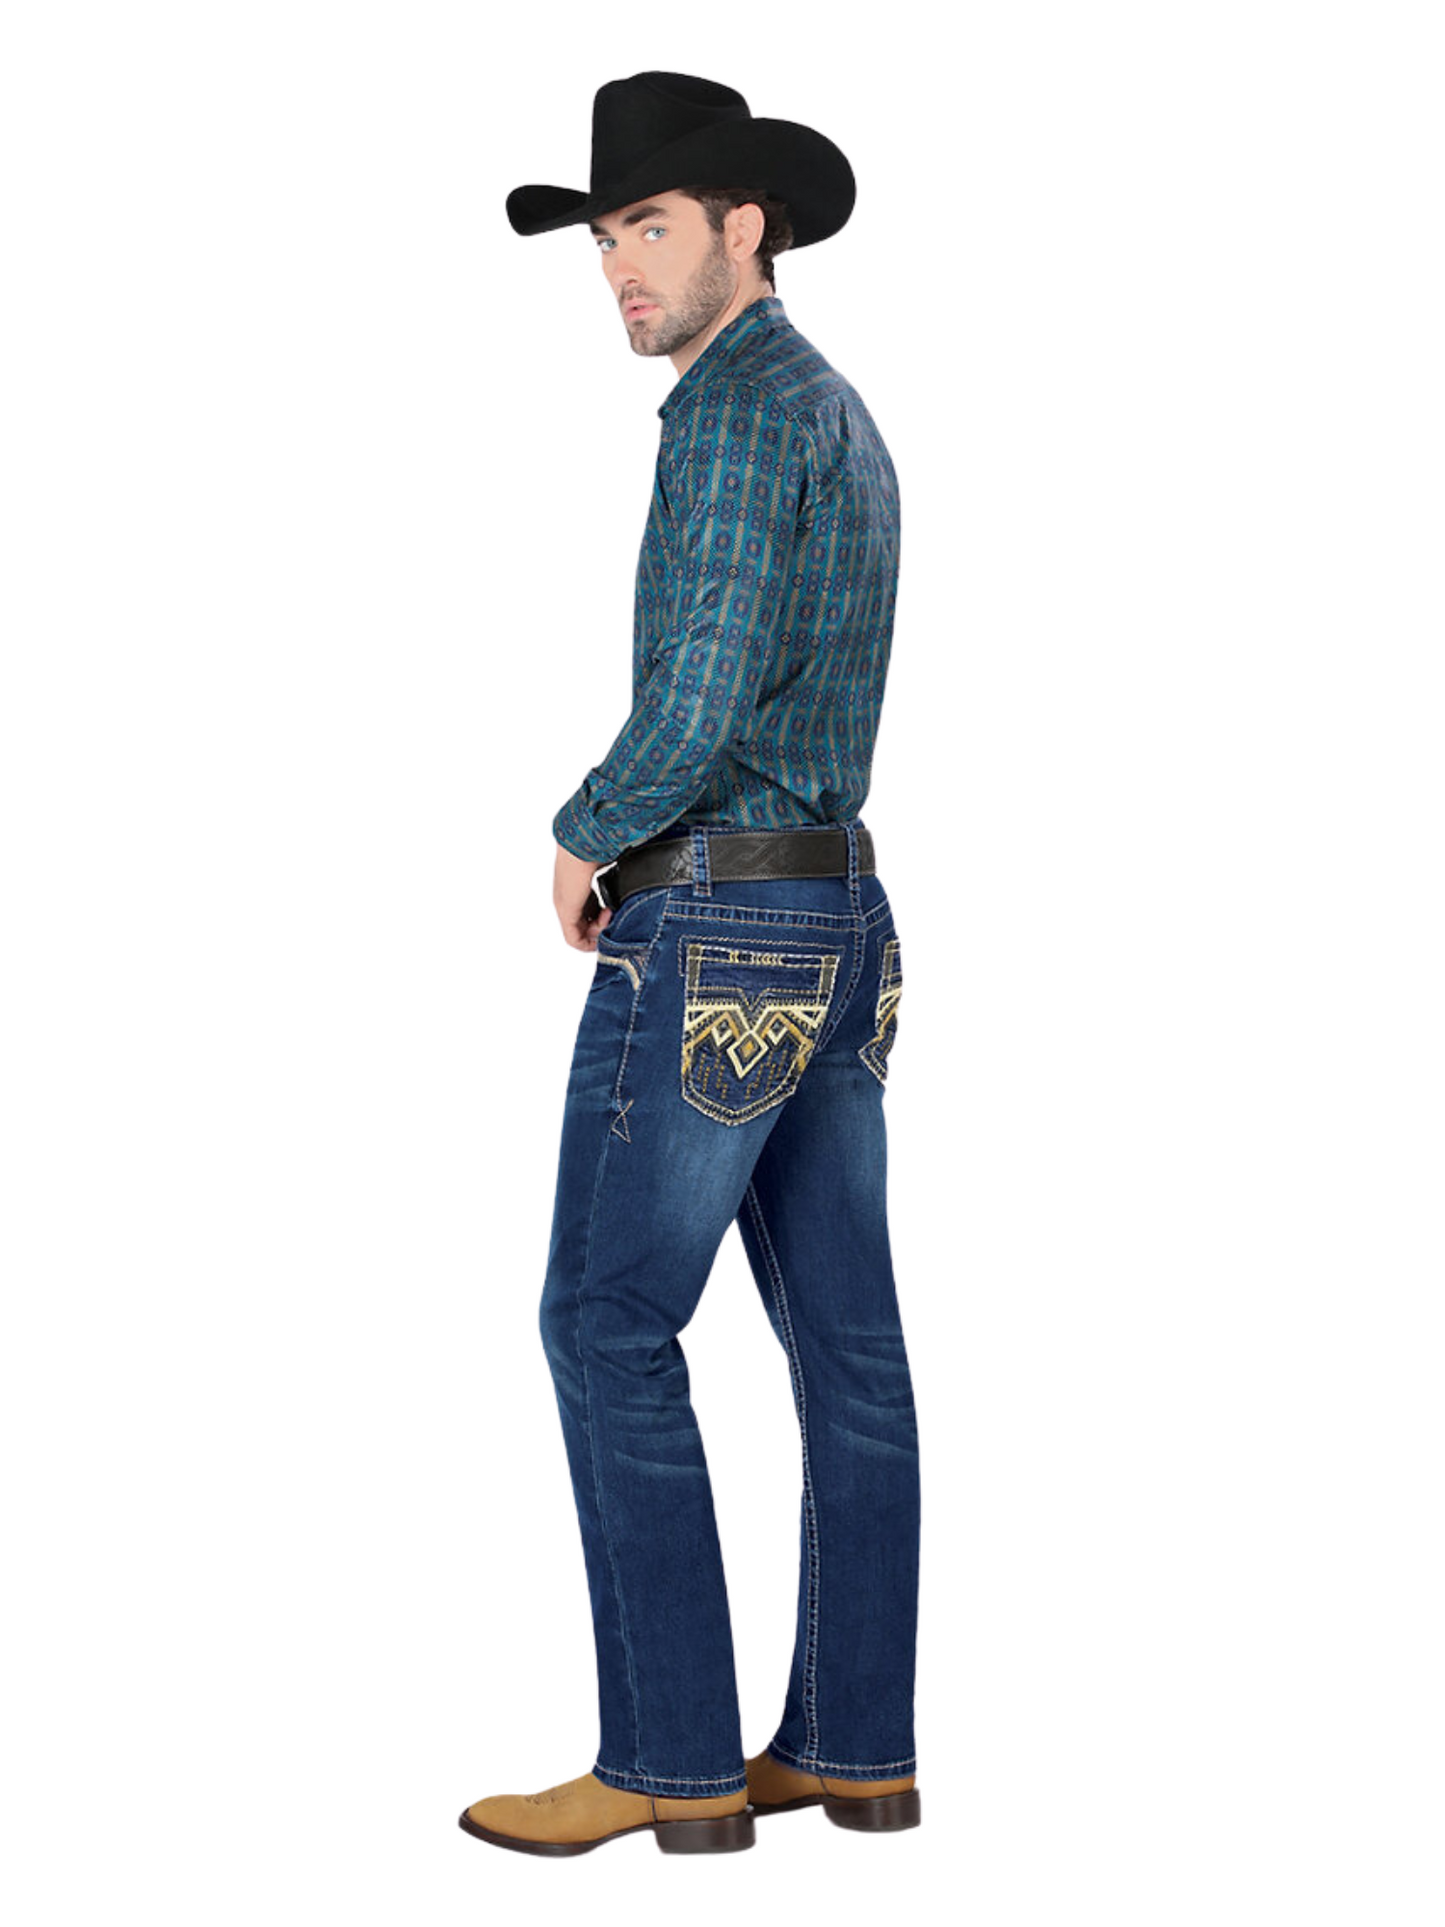 Stretch Denim Jeans for Men 'Montero' - ID: 4610 Denim Jeans Montero